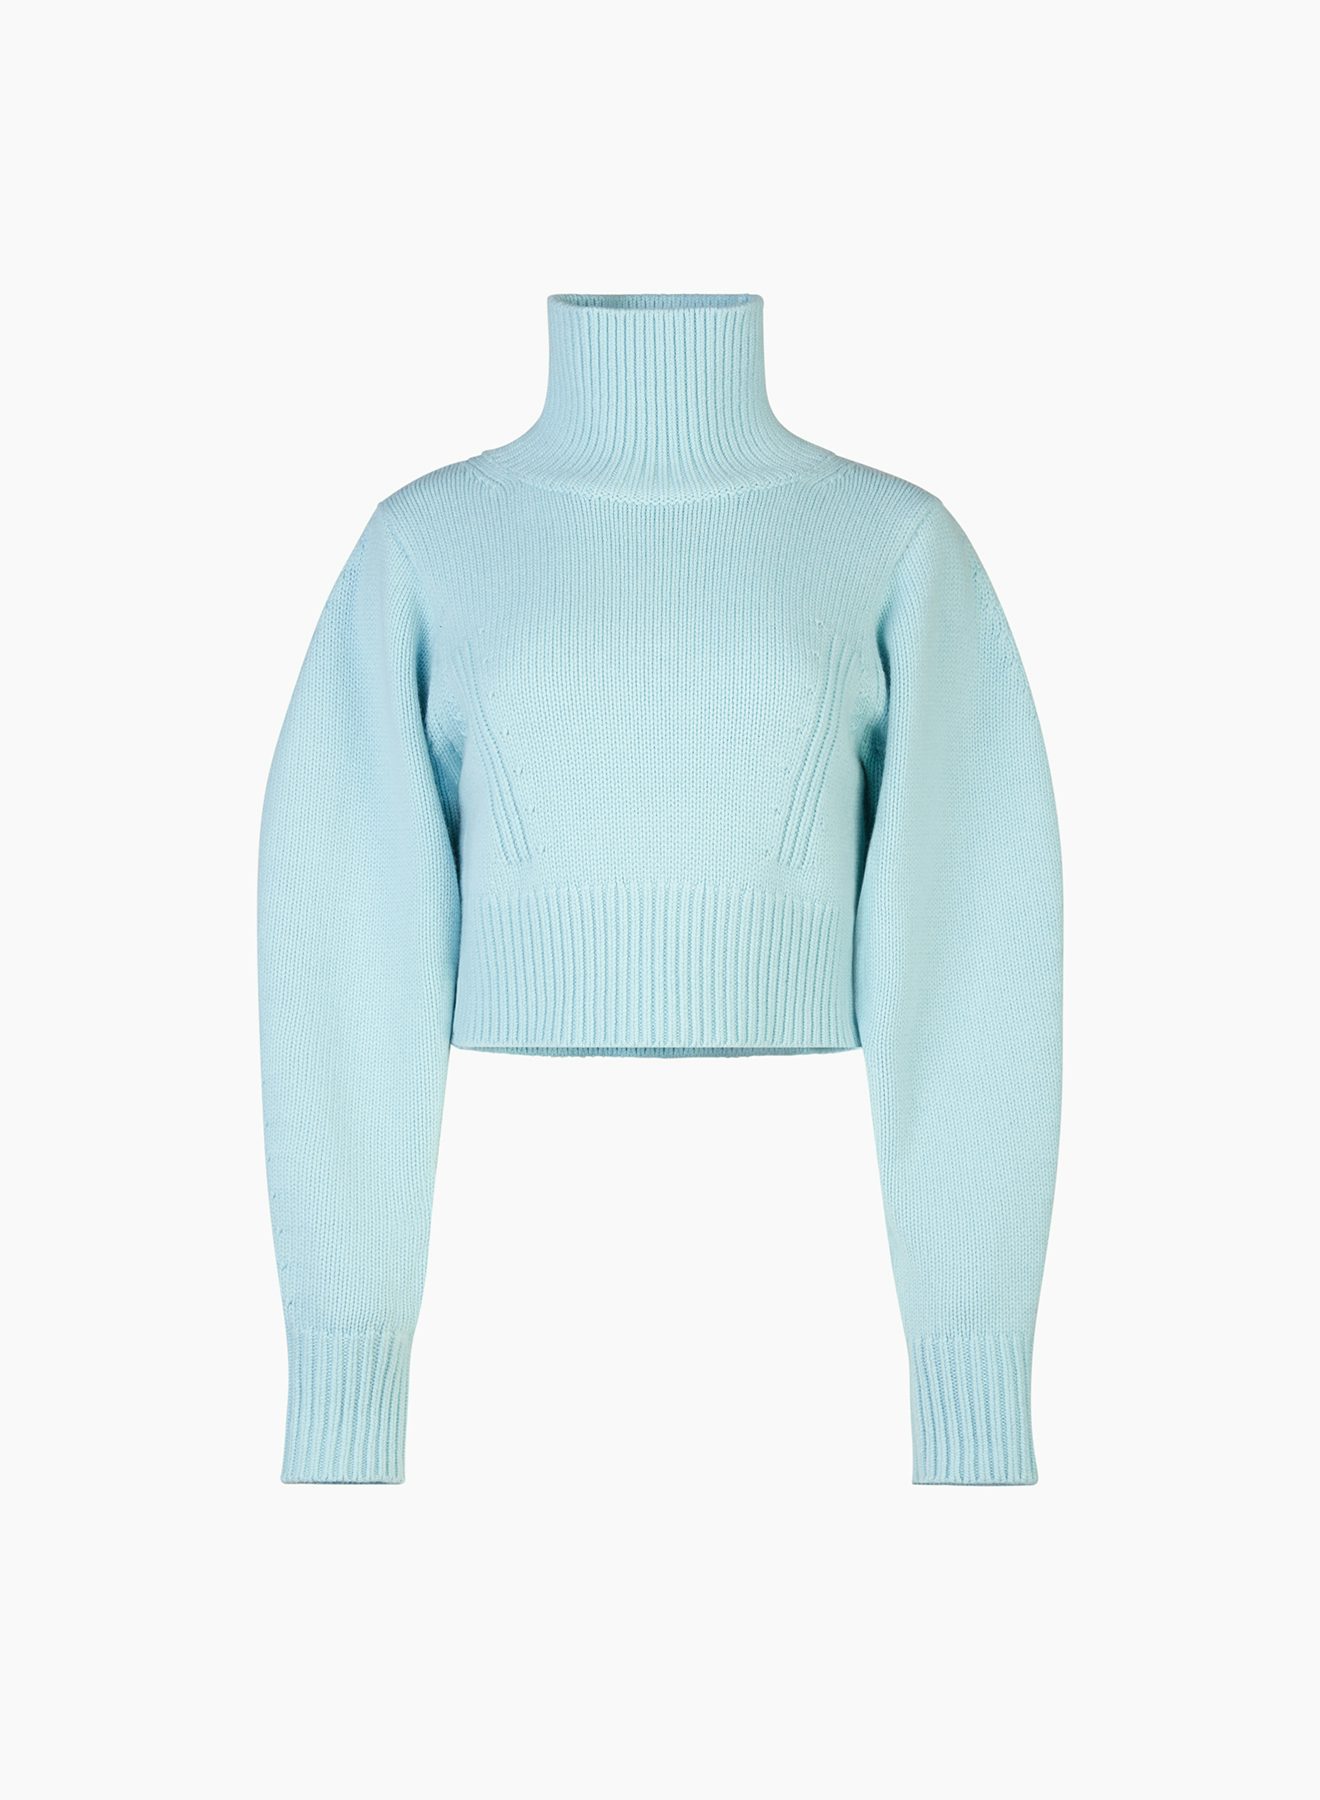 Suéter con Cuello Vuelto y Mangas Abullonadas Azul Claro - Nina Ricci 